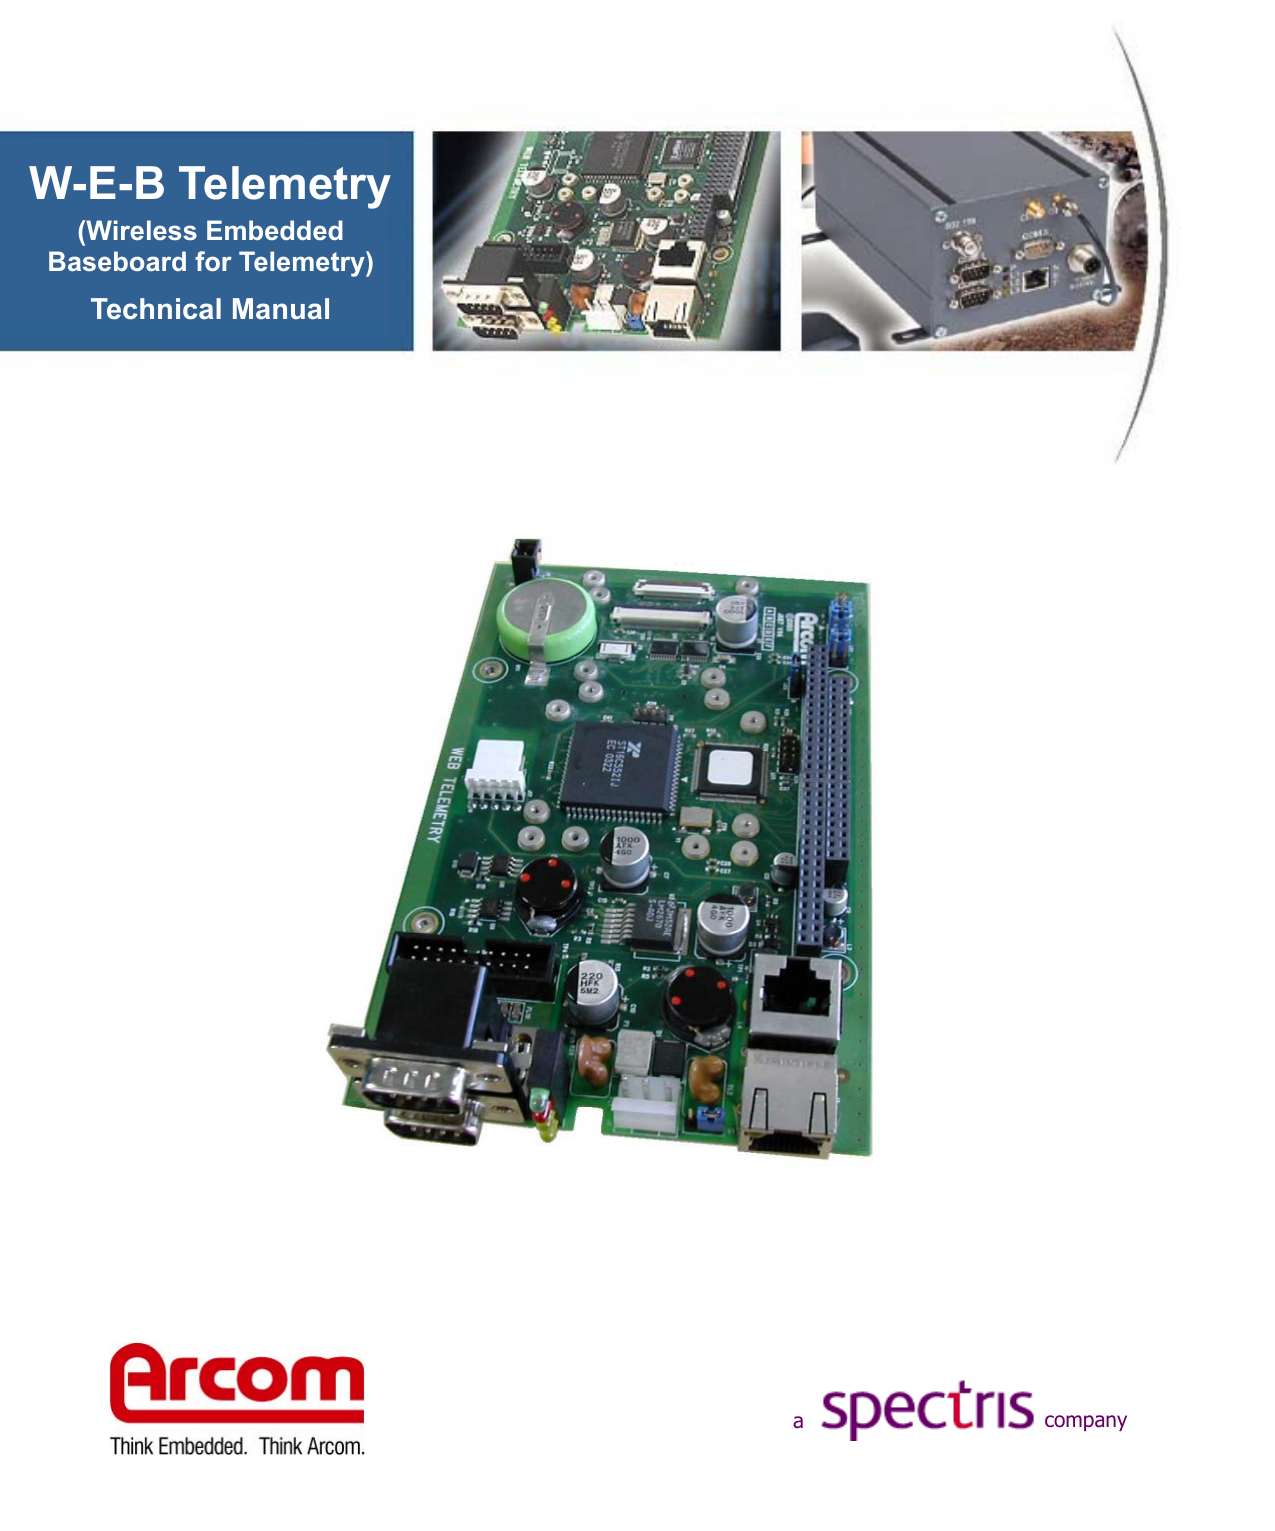   W-E-B Telemetry (Wireless Embedded Baseboard for Telemetry) Technical Manual companya